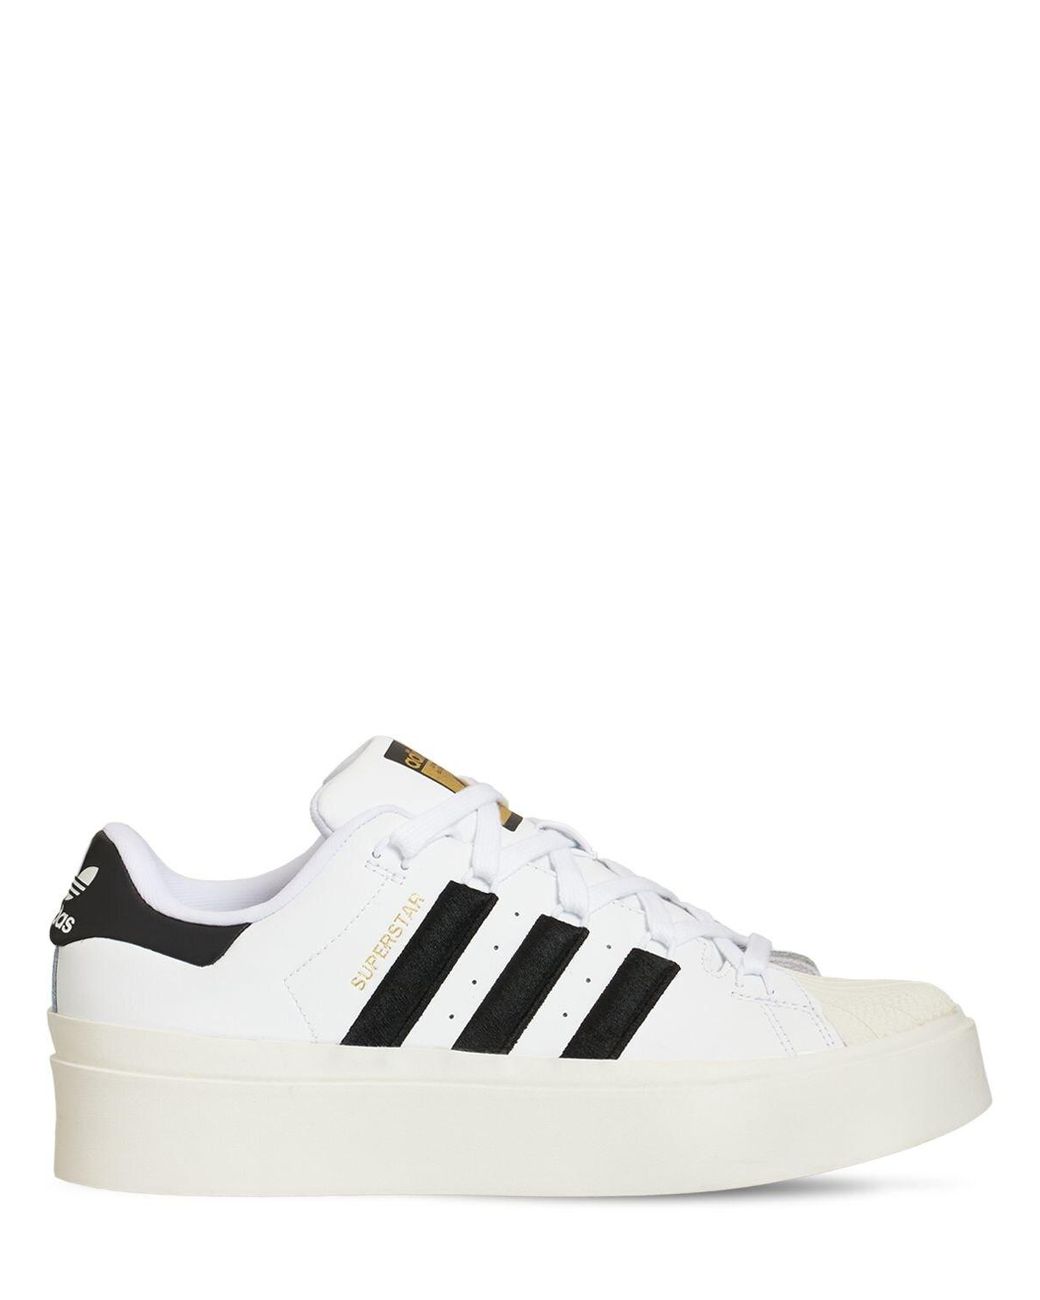 adidas Originals Synthetic Superstar Bonega Sneakers in White/Black (White)  | Lyst UK